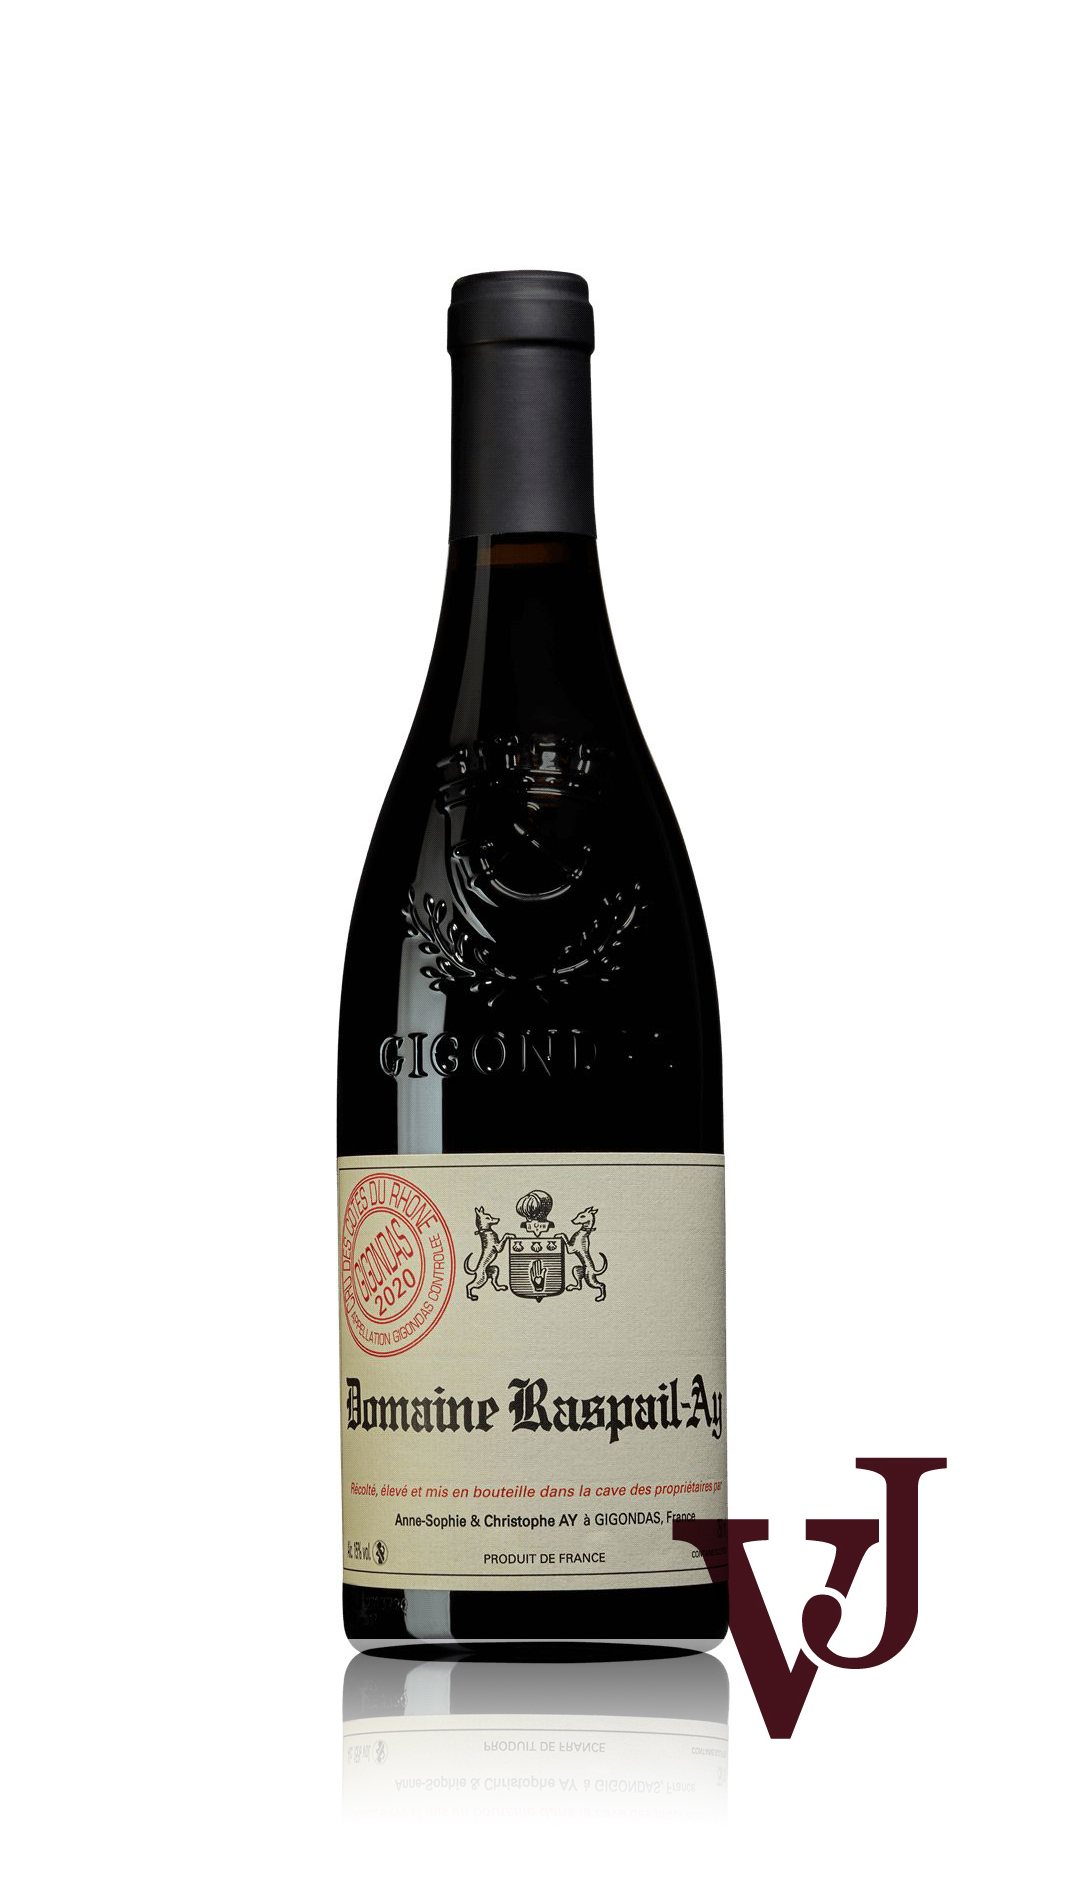 Rött Vin - Domaine Raspail-Ay Gigondas 2020 artikel nummer 9307701 från producenten Domaine Raspail-Ay från Frankrike